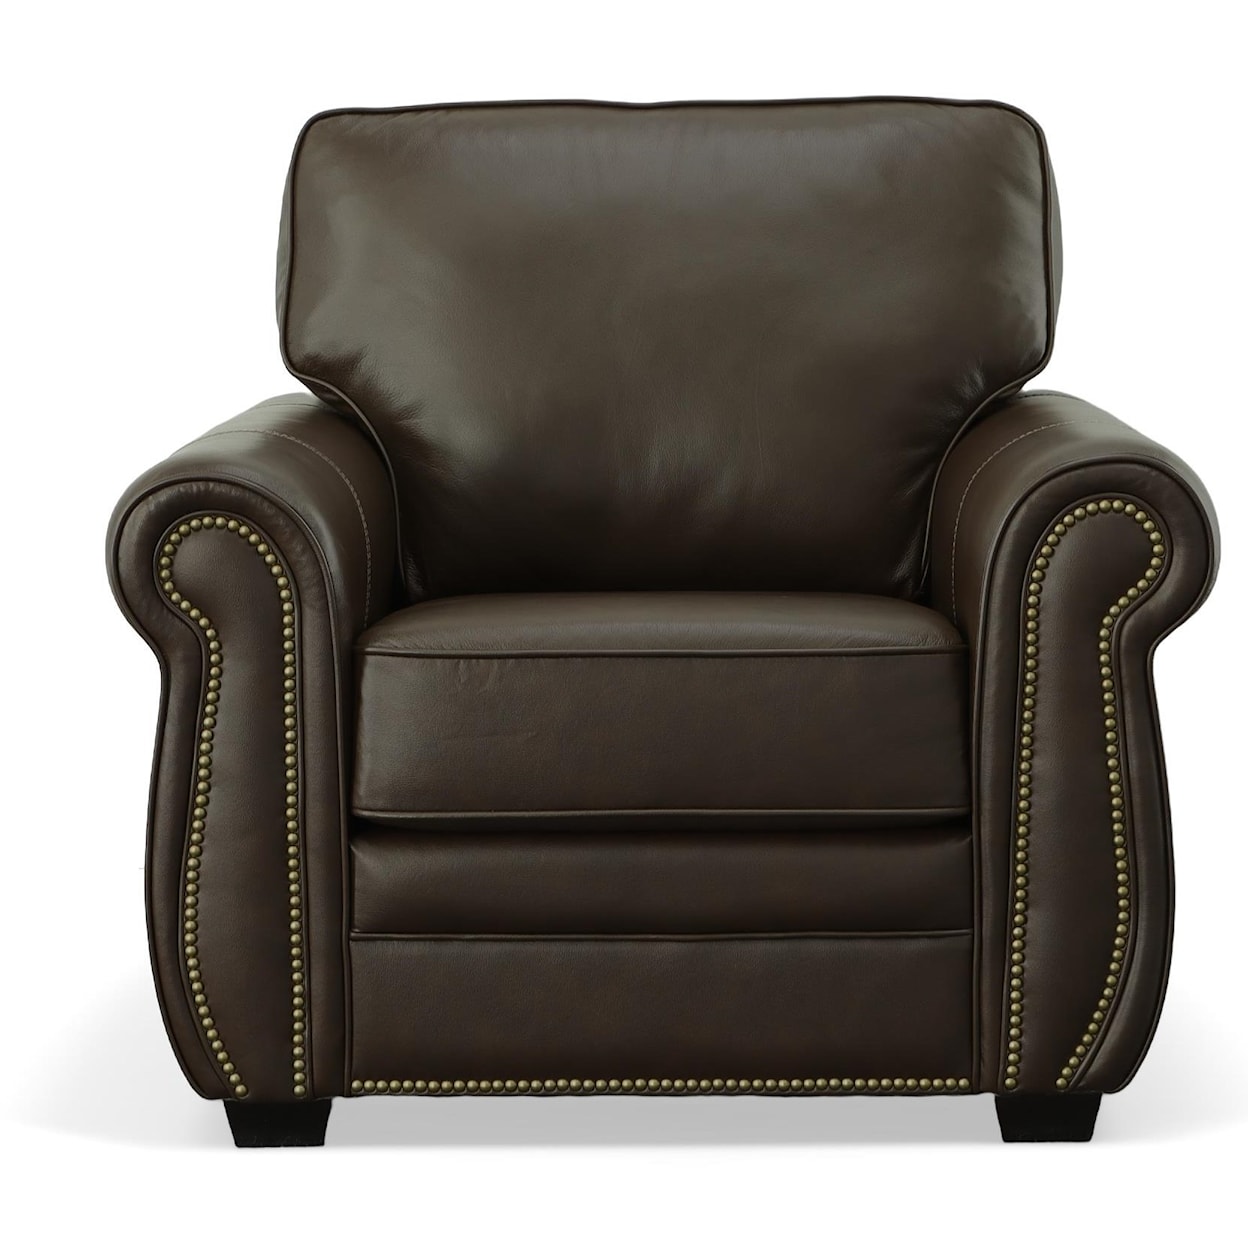 Palliser Viceroy70492 Chair